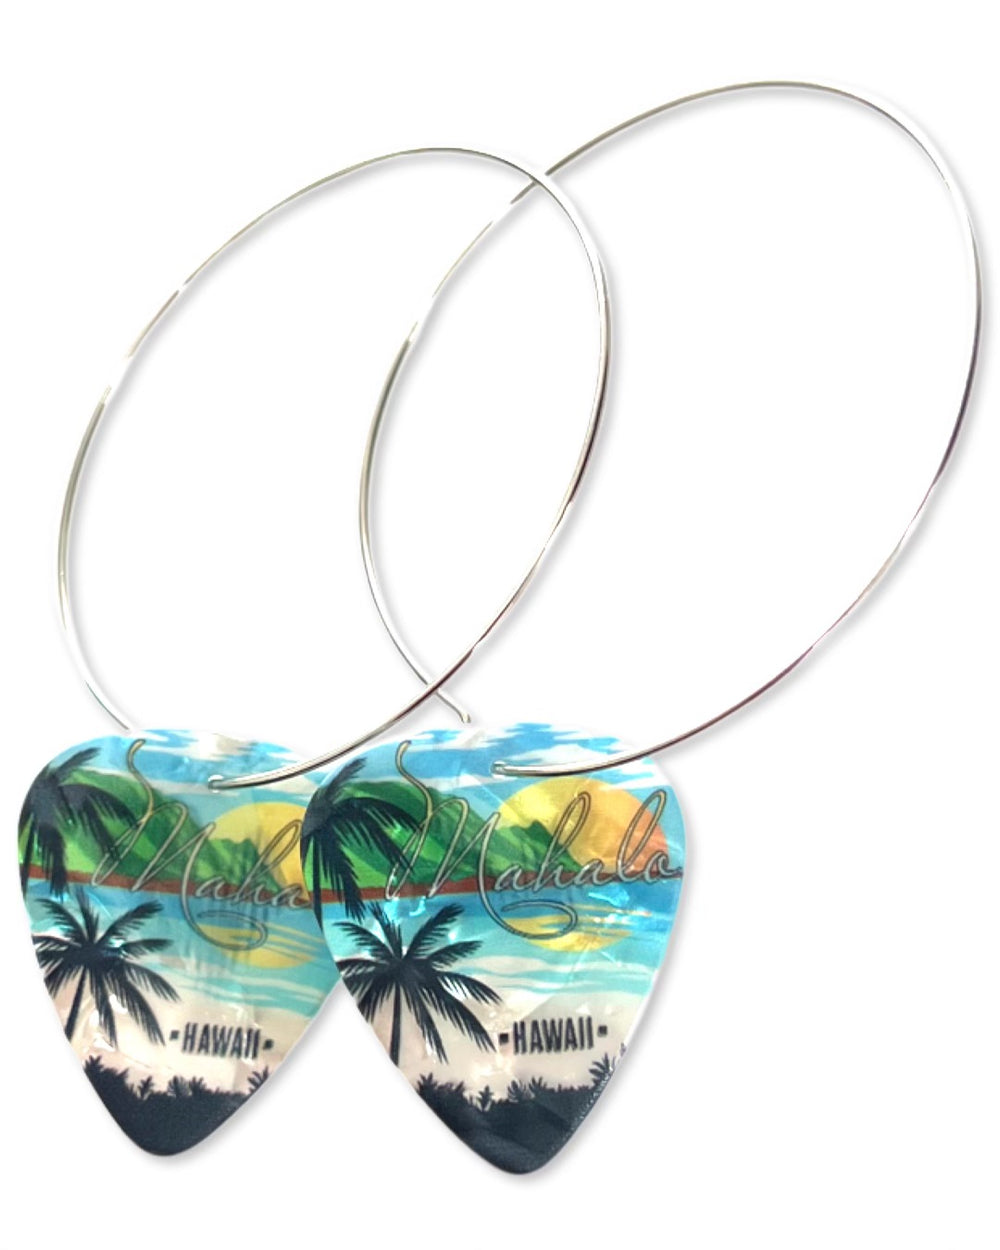 WS Mahalo Hawaii Beach Single Guitar Pick Earrings